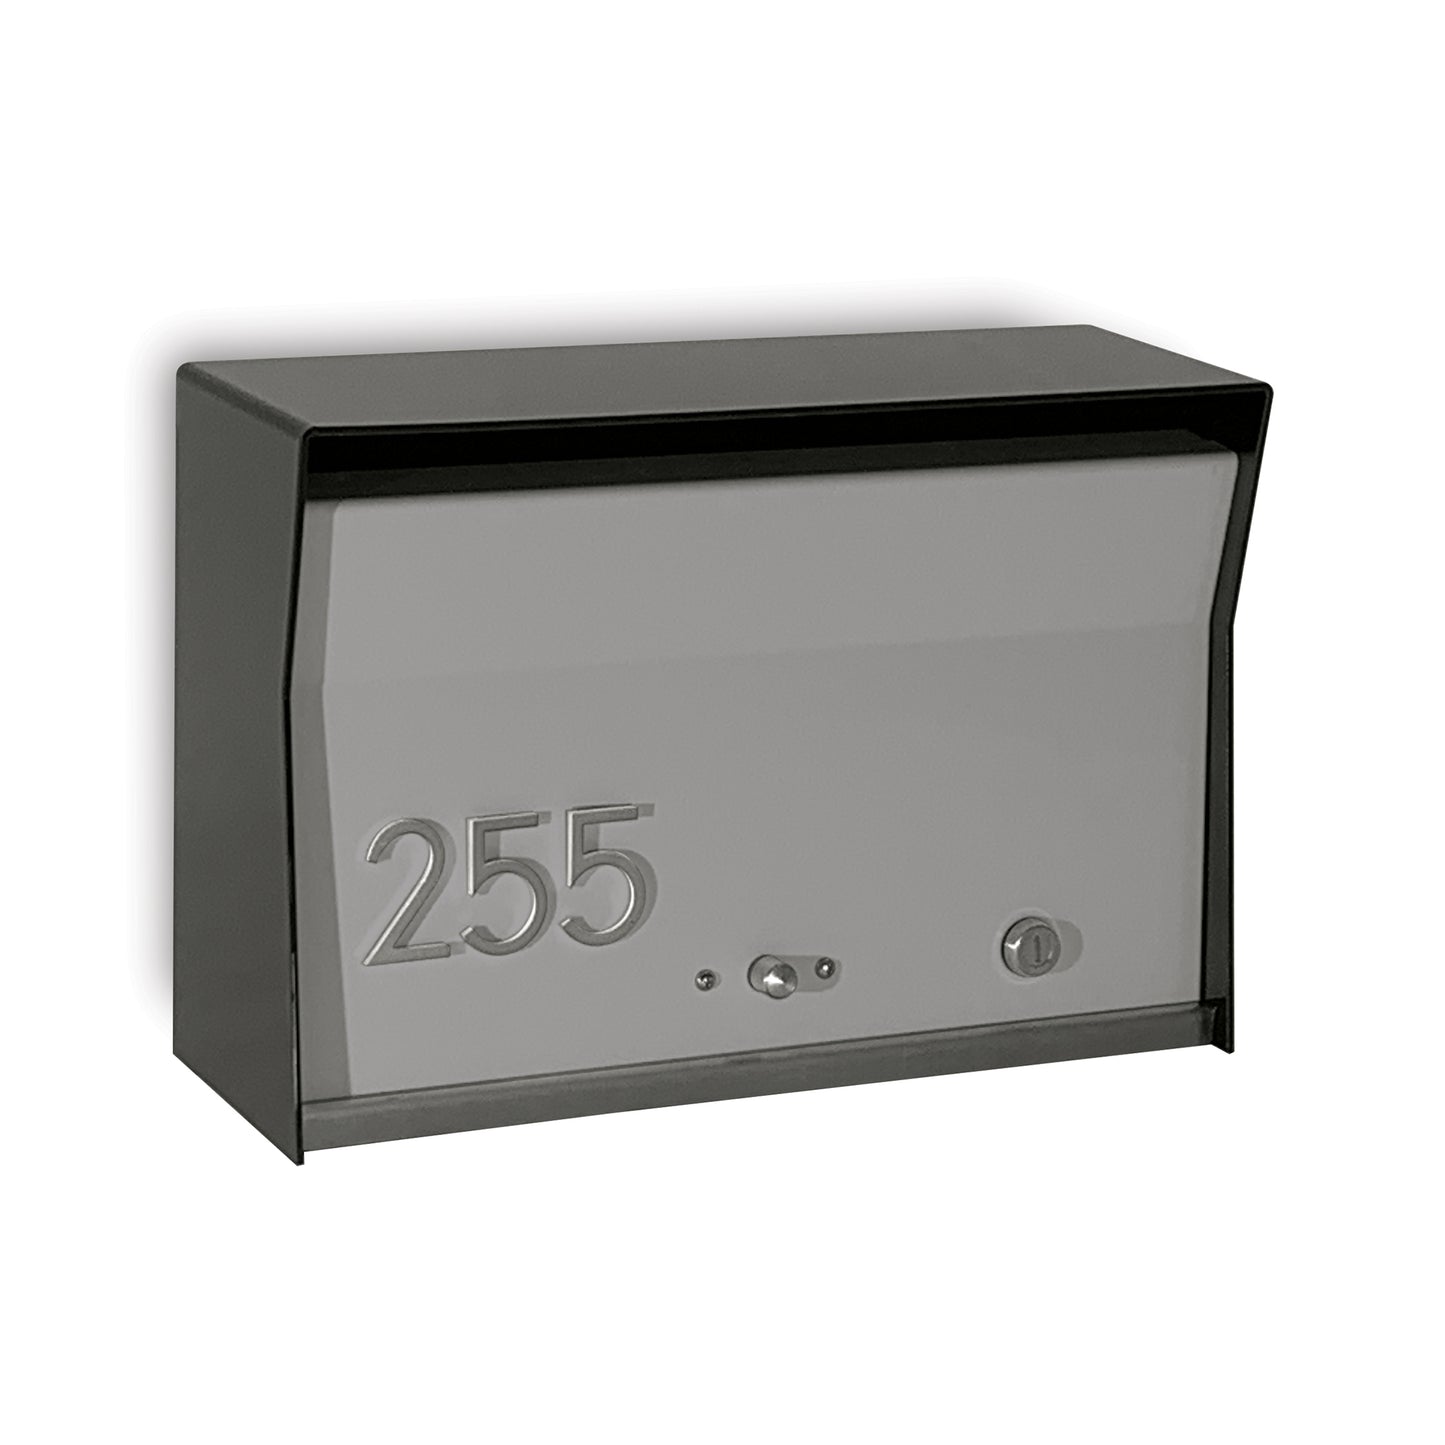 RetroBox Locking Wall Mount Mailbox in jet black and stainless steel